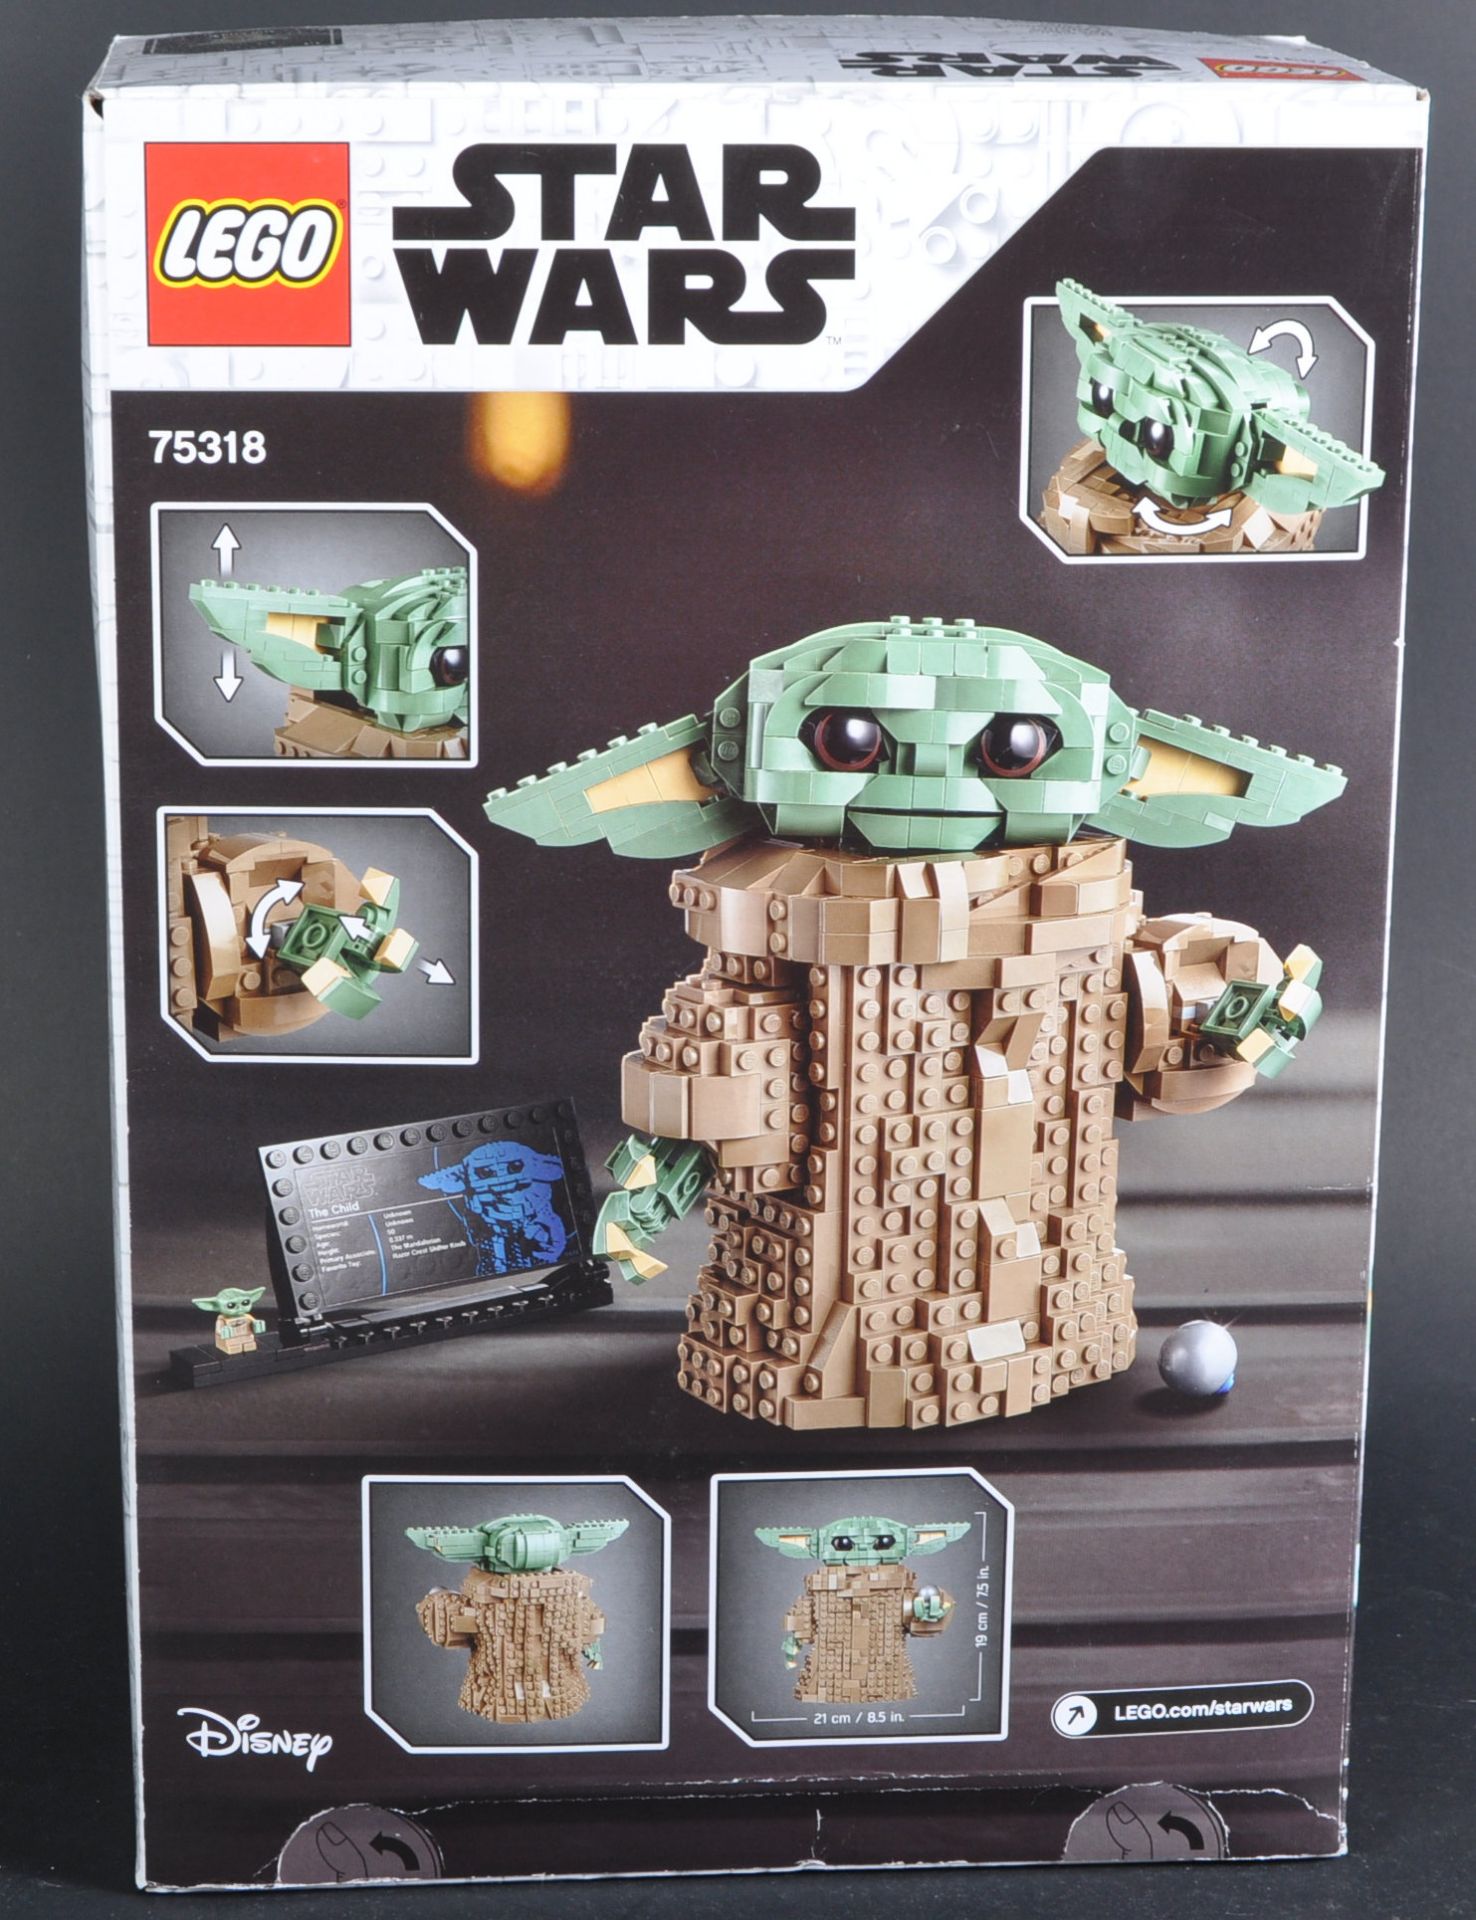 LEGO SET - STAR WARS - 75318 - THE CHILD - Image 2 of 2